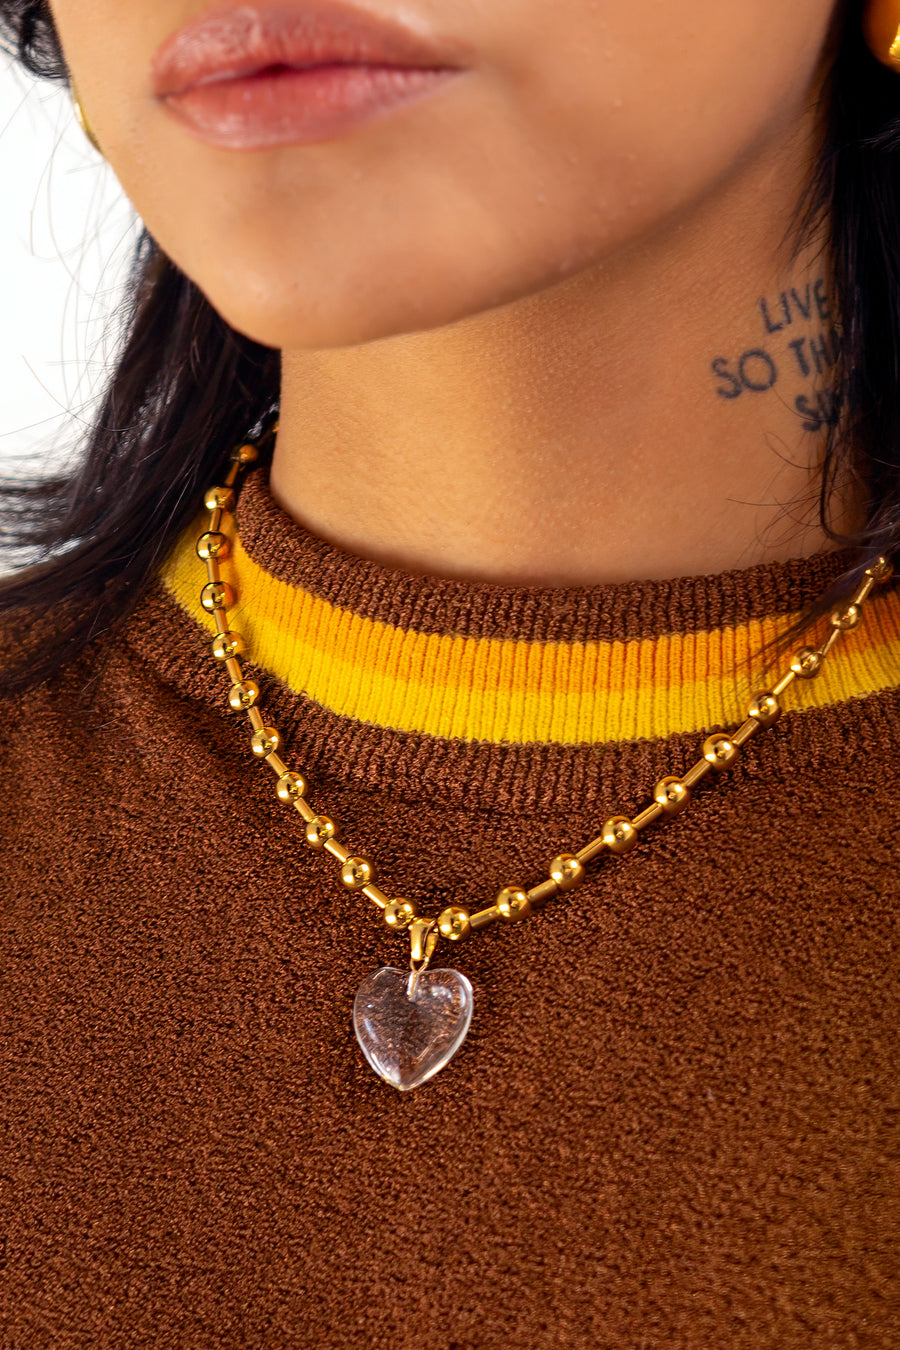 Die Heart Necklace Gold